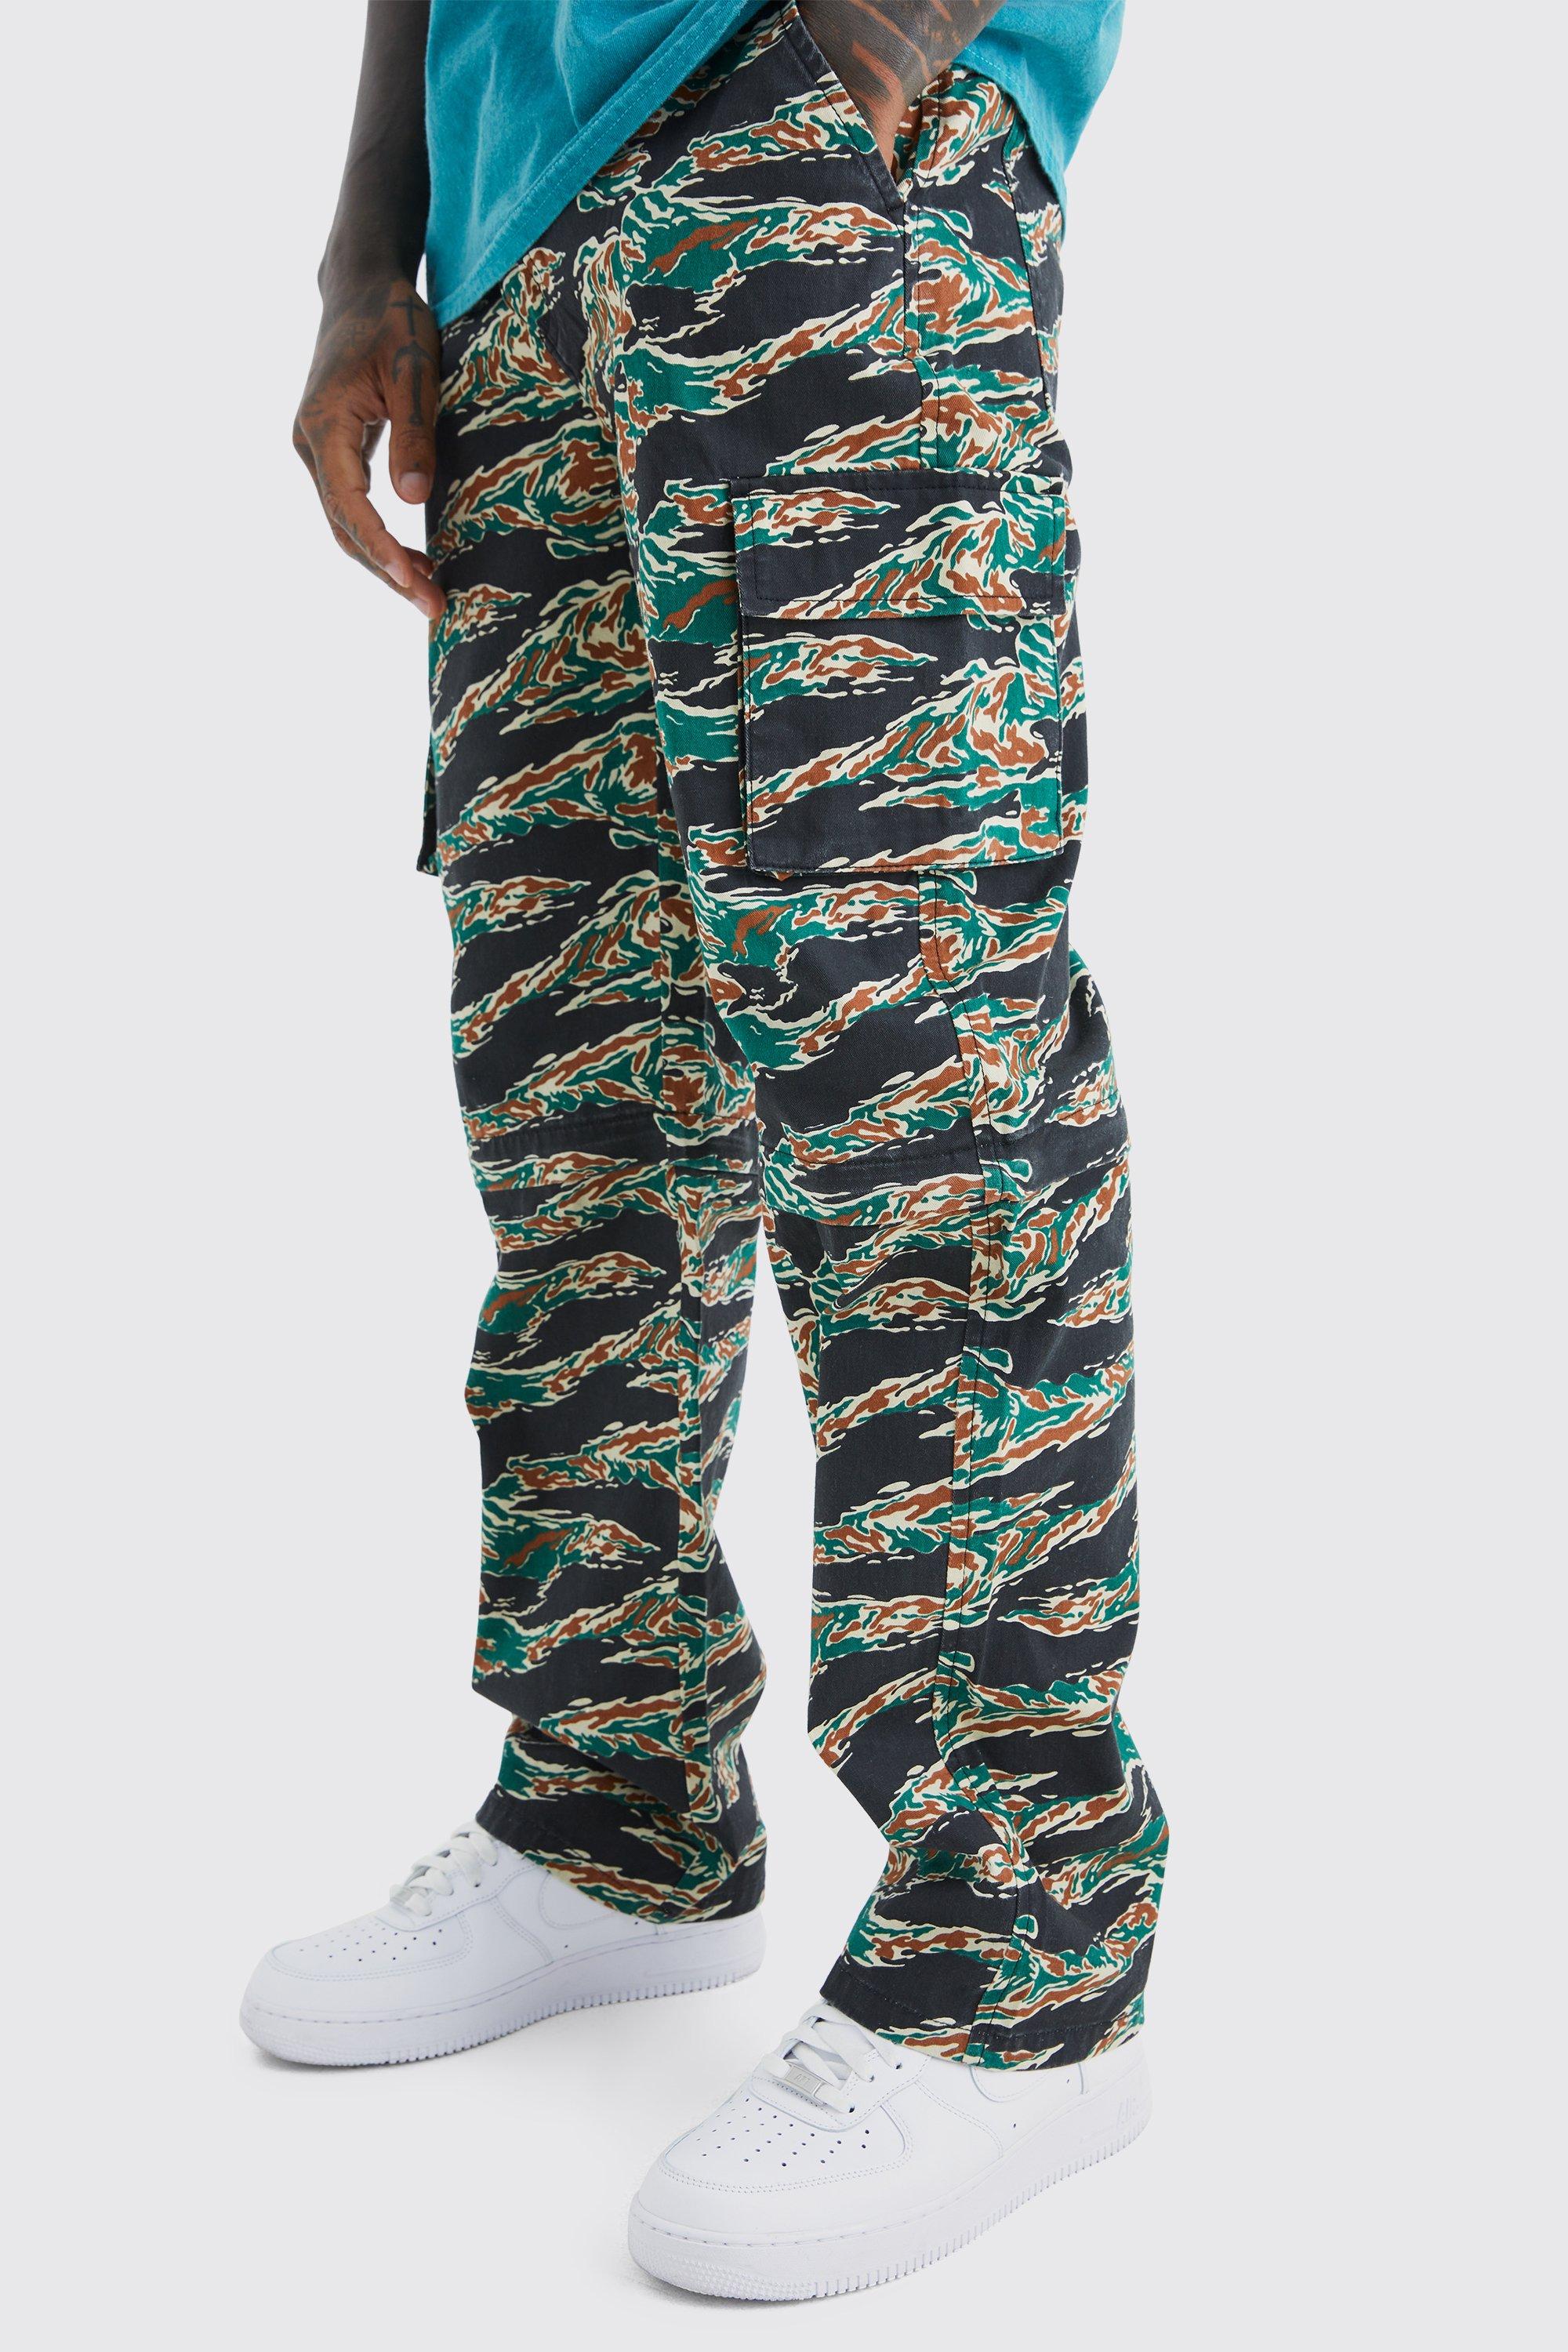 pantalon cargo zippé à imprimé camouflage homme - kaki - 30, kaki